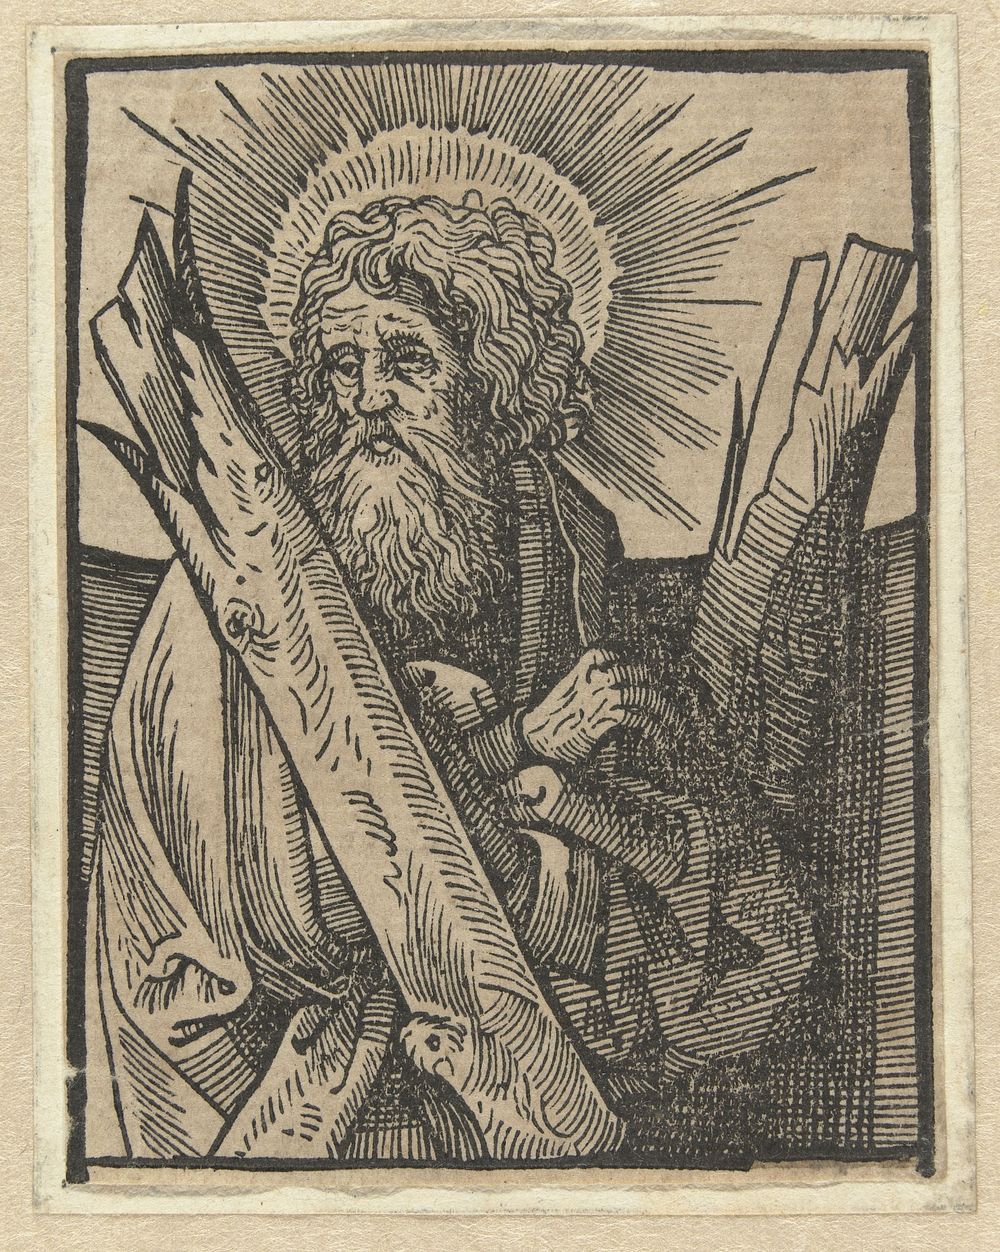 De apostel Andreas (1518 - 1550) by anonymous and Jacob Cornelisz van Oostsanen